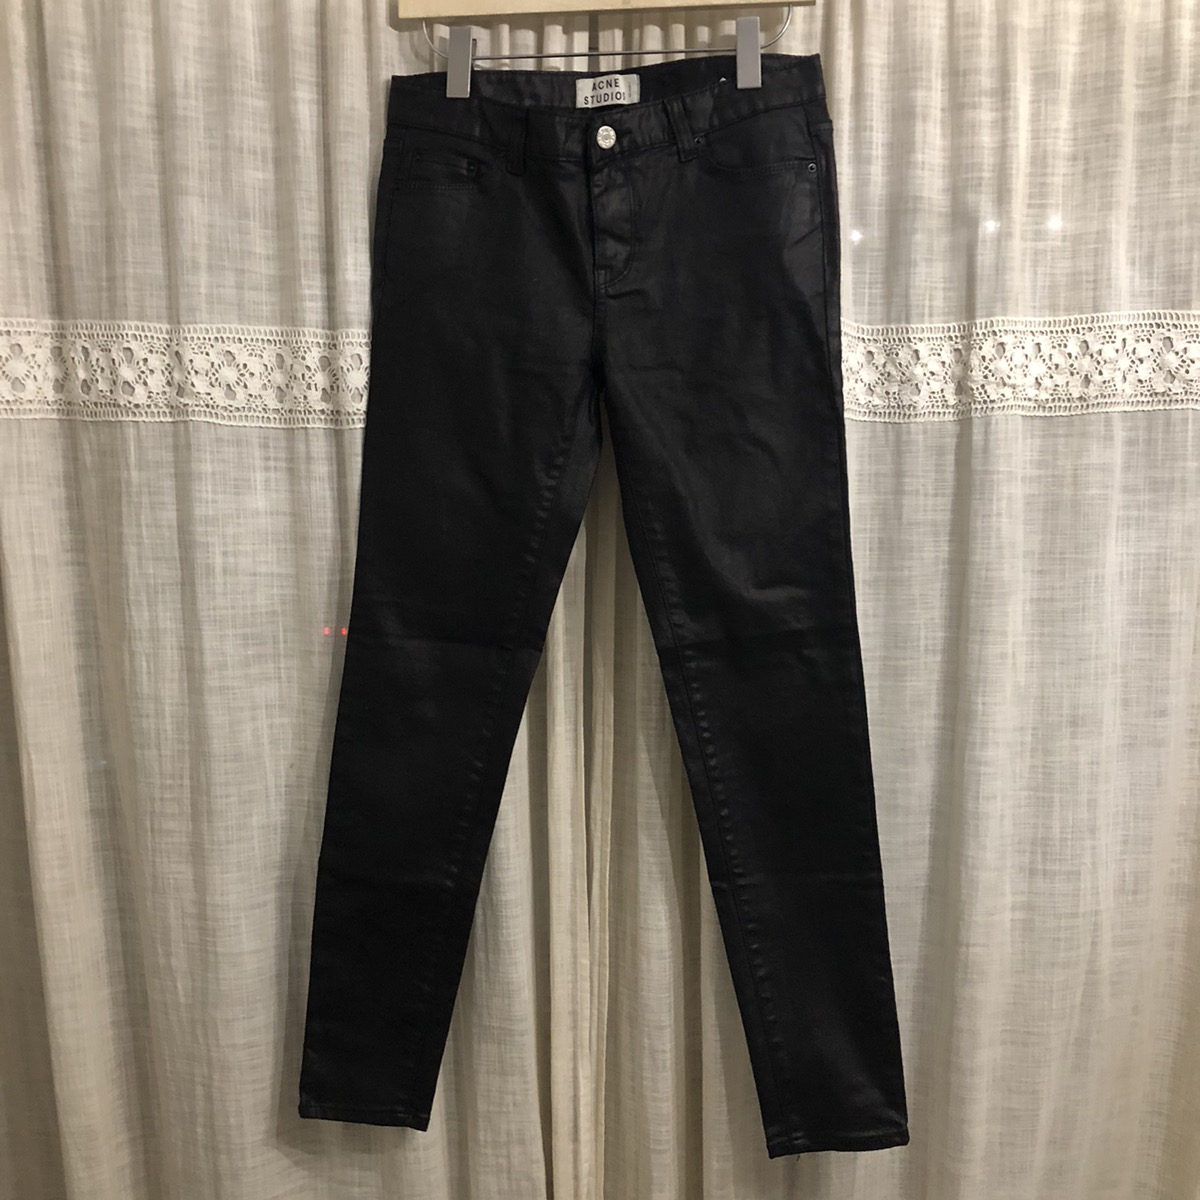 Acne studios coated pants - 3